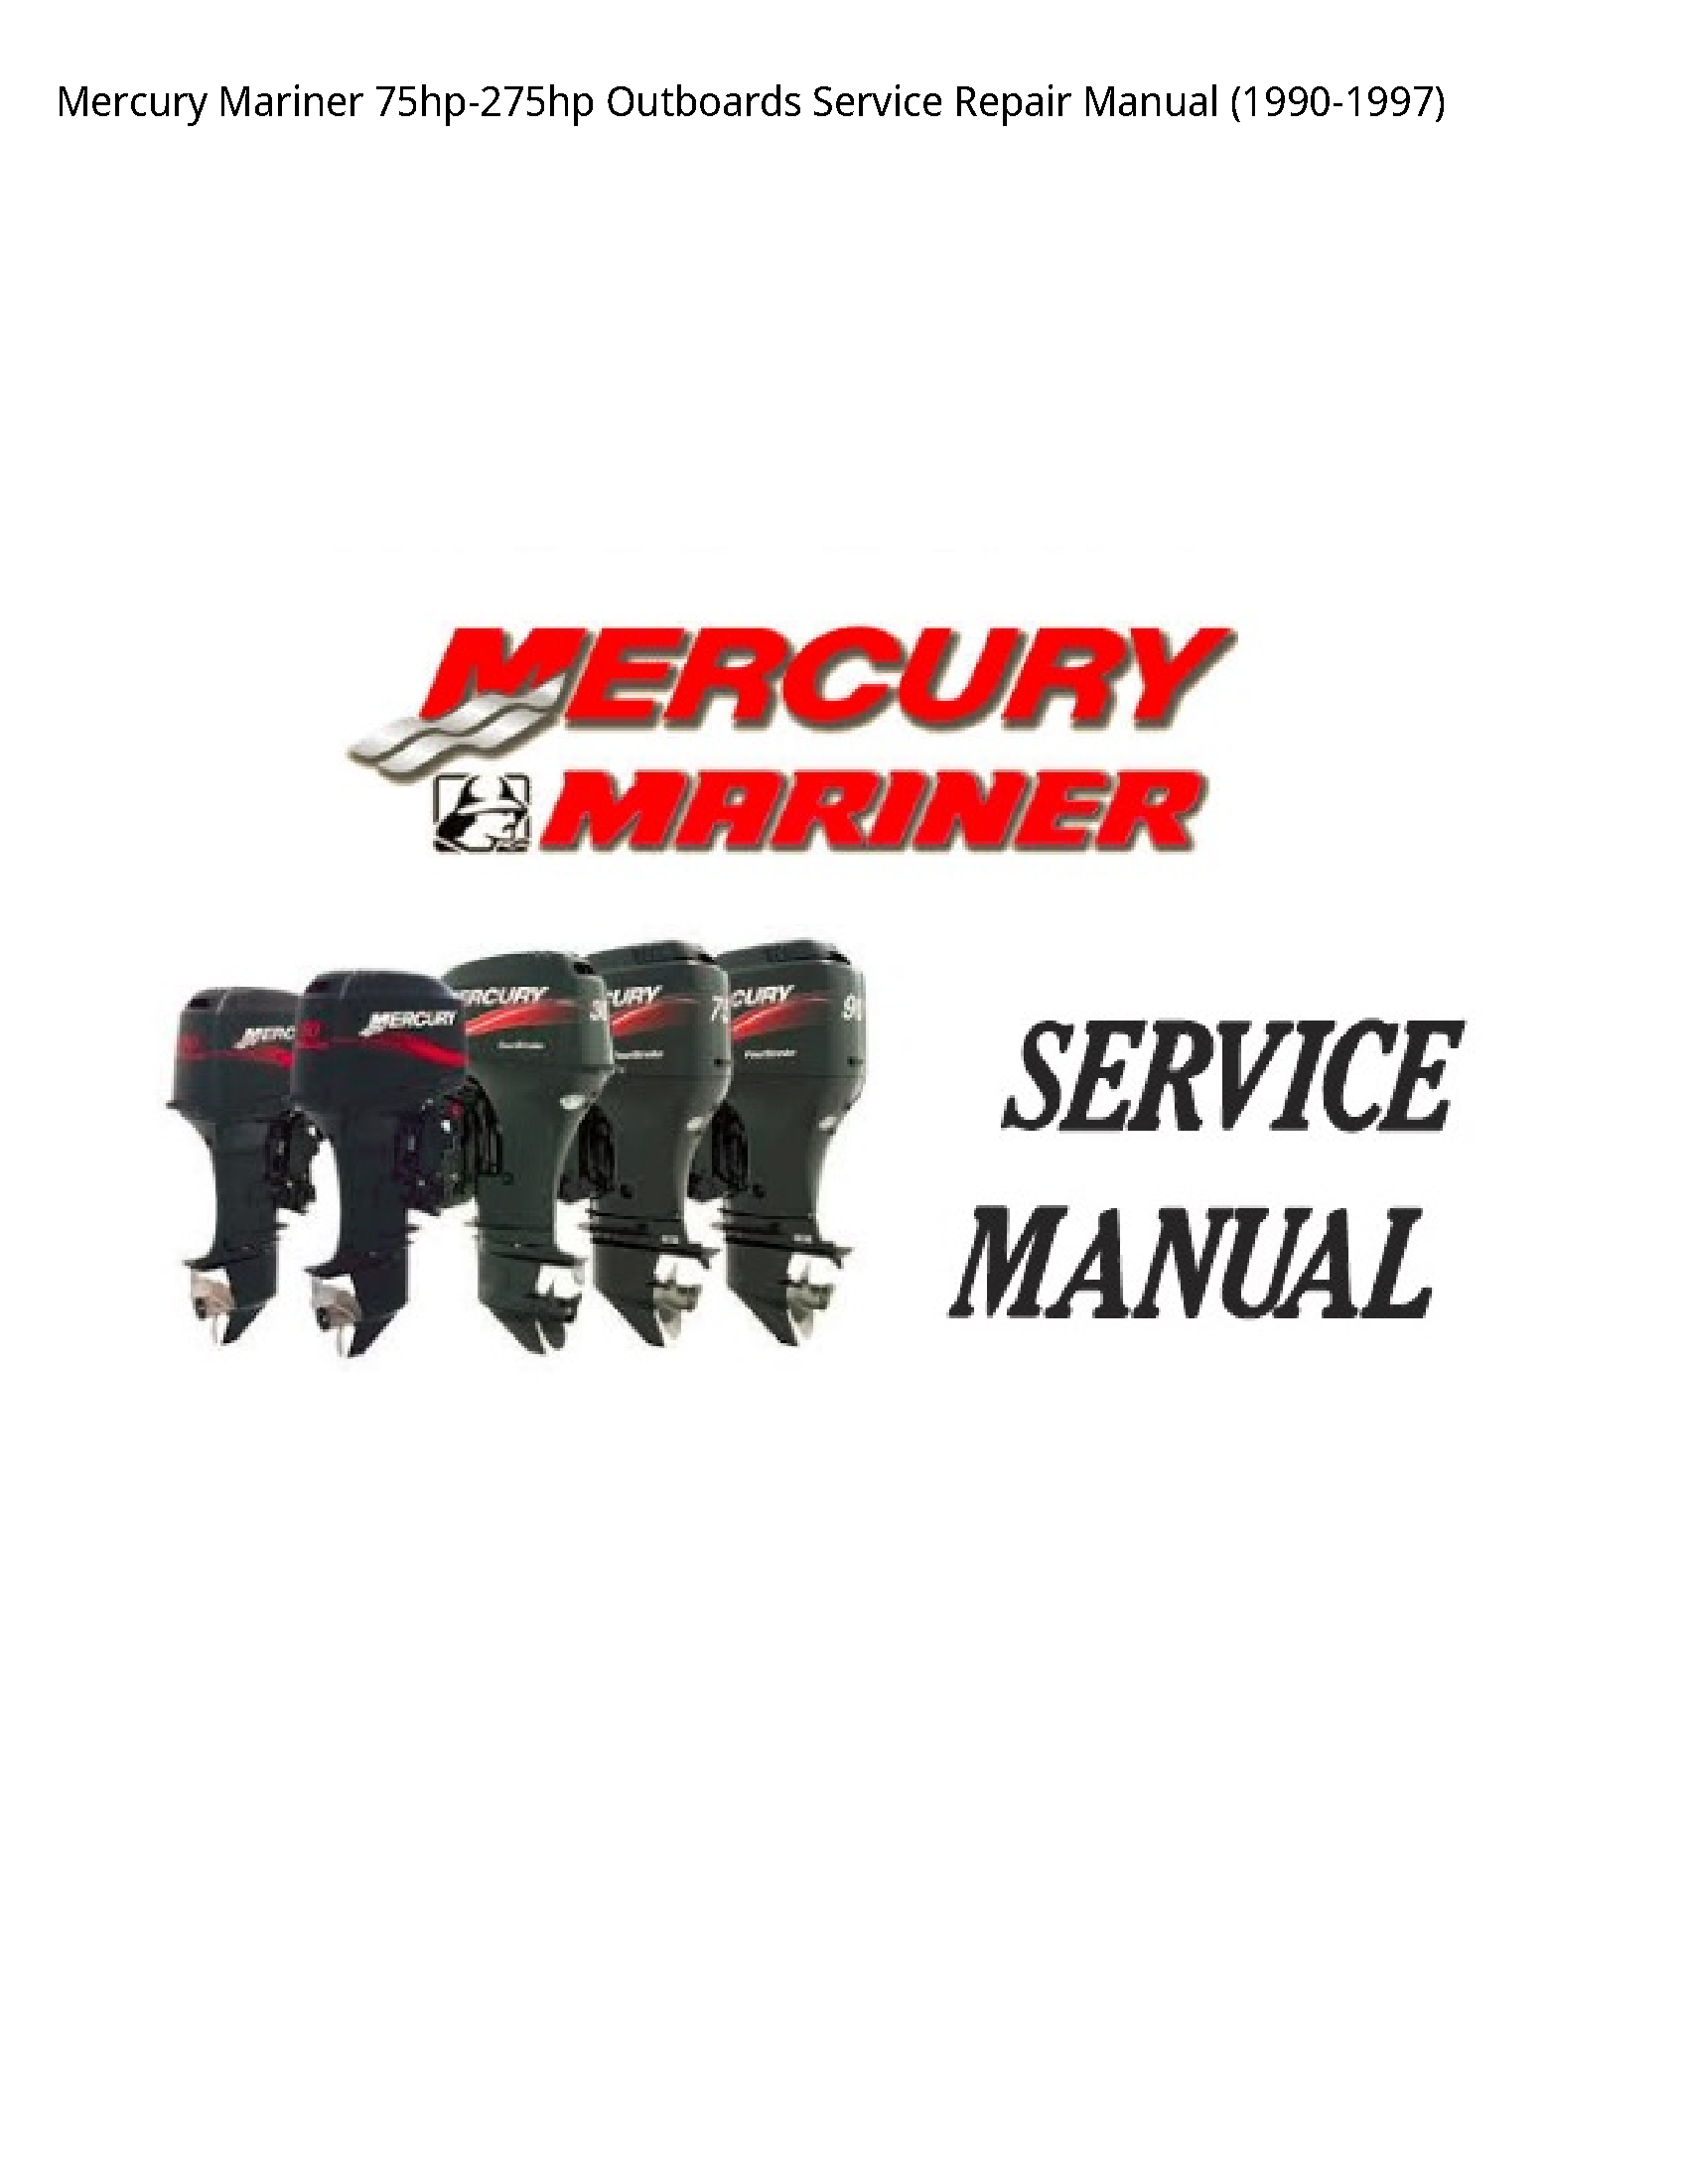 Mercury Mariner 75hp-275hp Outboards manual